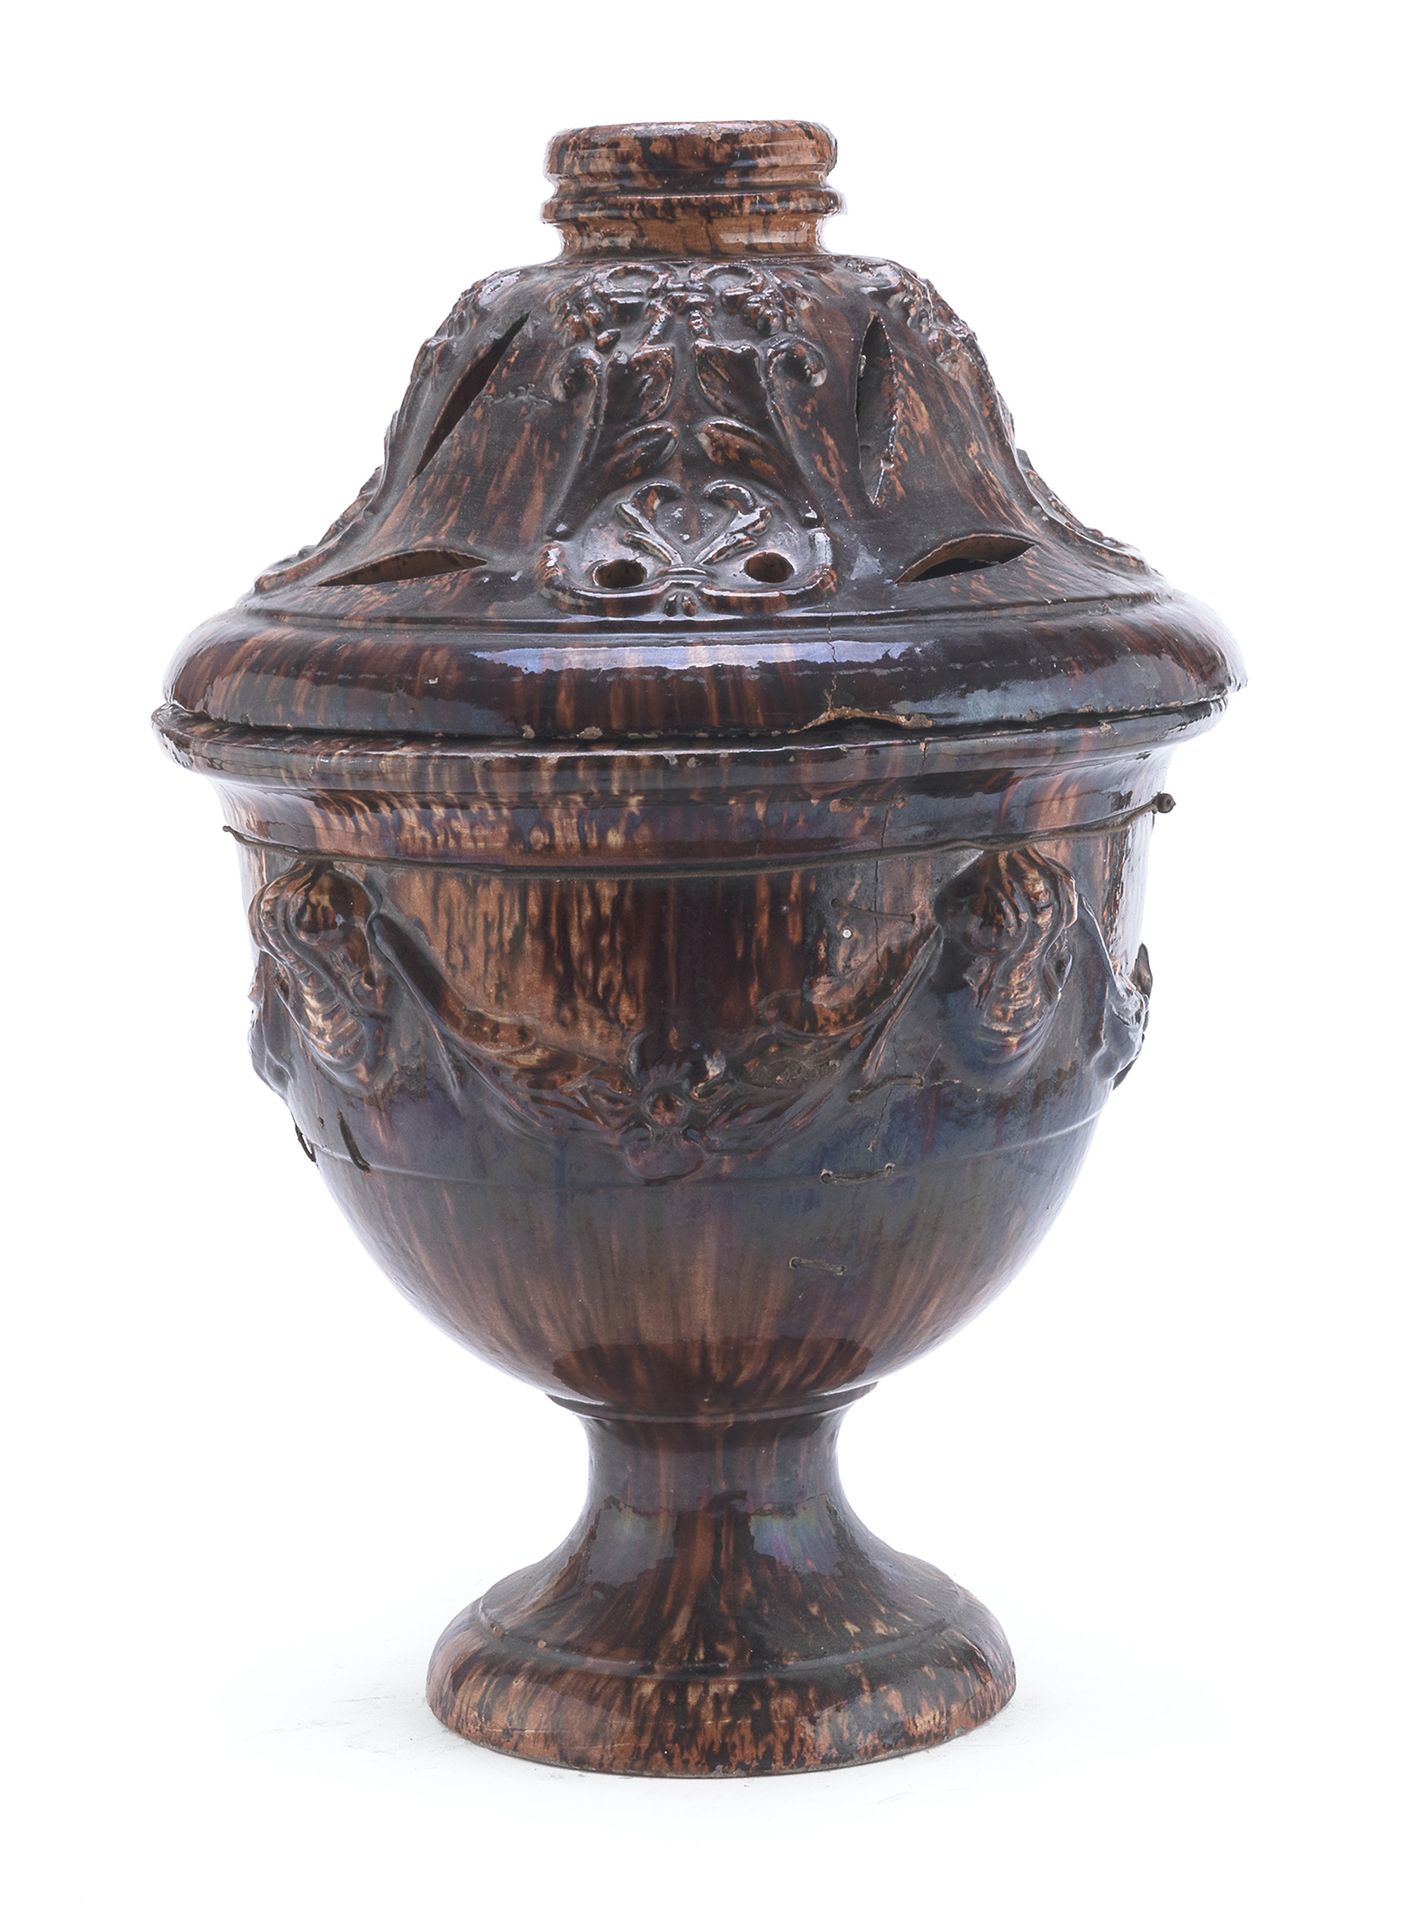 Null 大型赤土陶罐，意大利南部，19世纪末


有镂空的盖子和高浮雕的身体，装饰着植物的帷幔。


尺寸为57 x 40厘米。


琴身的修复日期是用时代格&hellip;